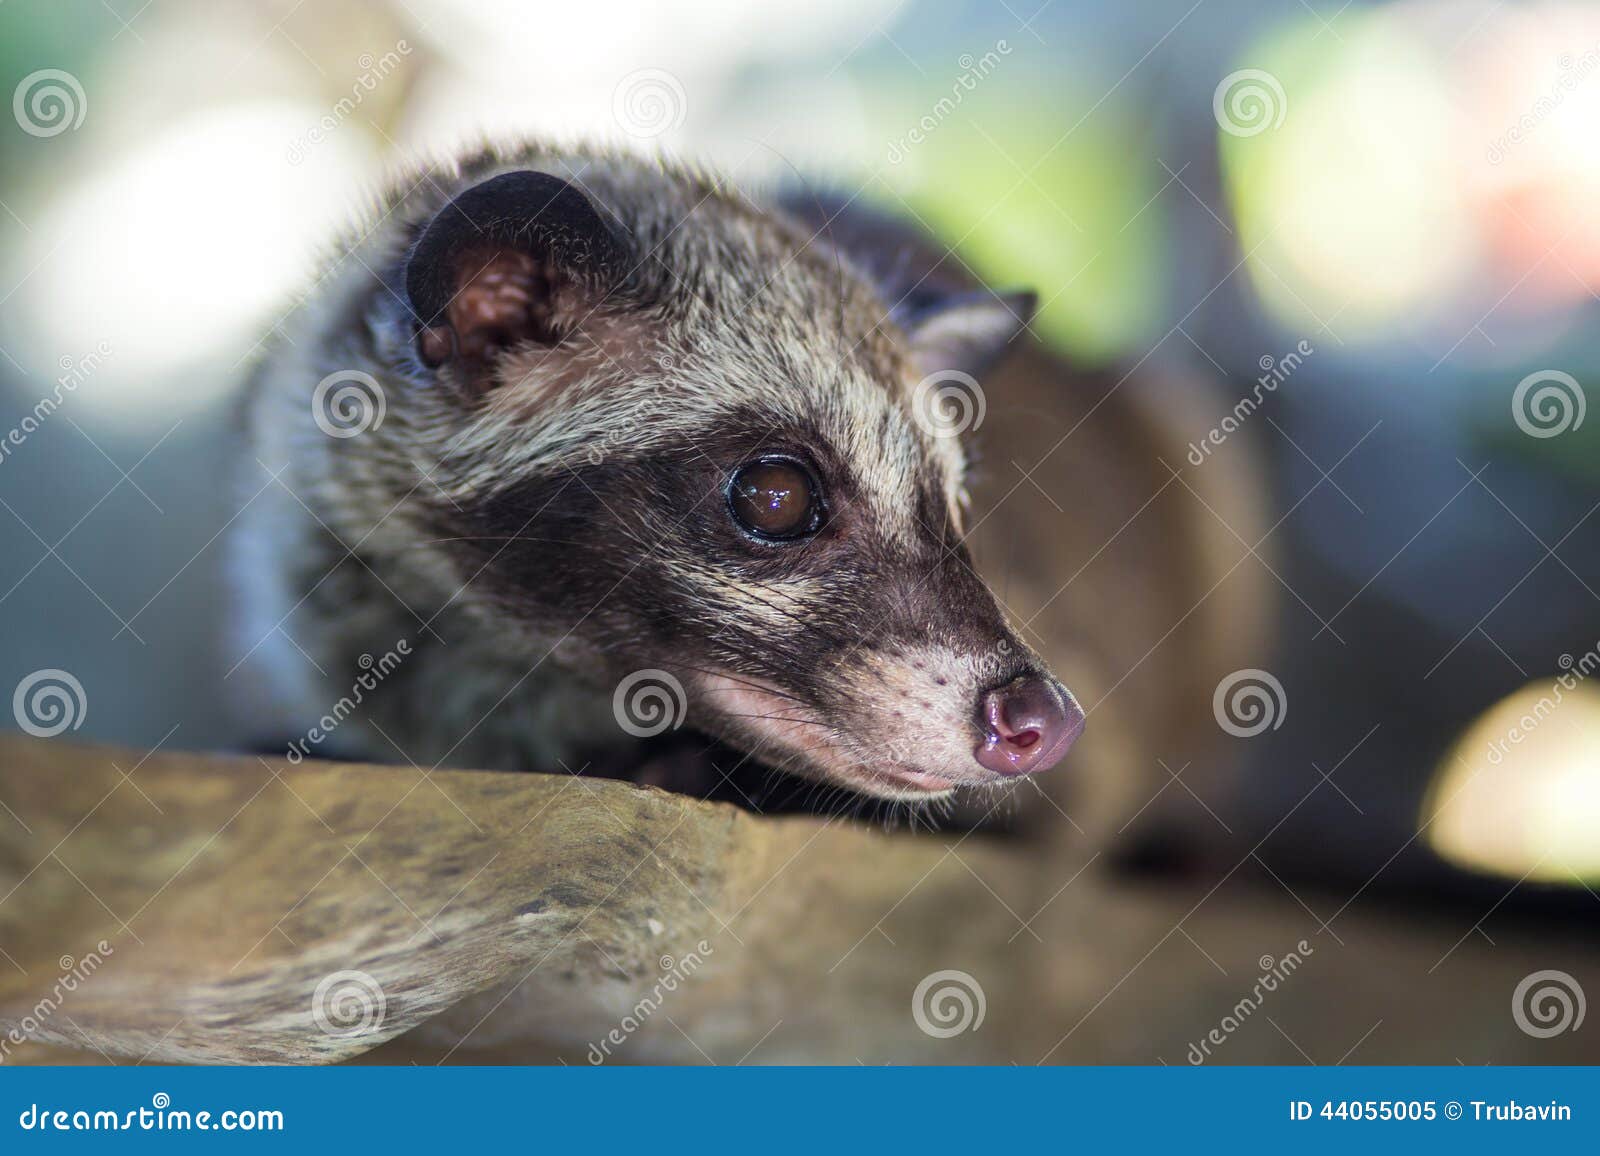 Asian Palm Civet Produces Kopi Luwak. Stock Image - Image of agriculture,  animal: 44055005